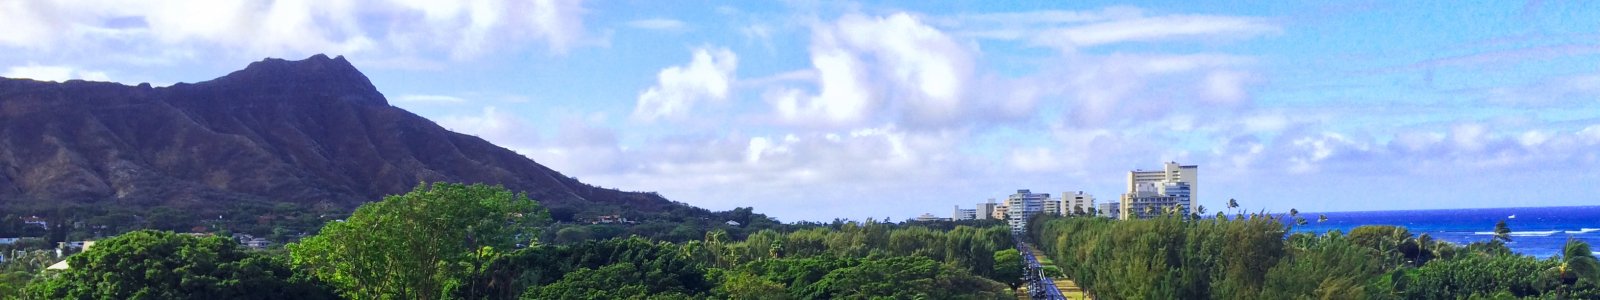 ​Diamond Head and The Gold Coast: Waikiki’s Oasis of Calm